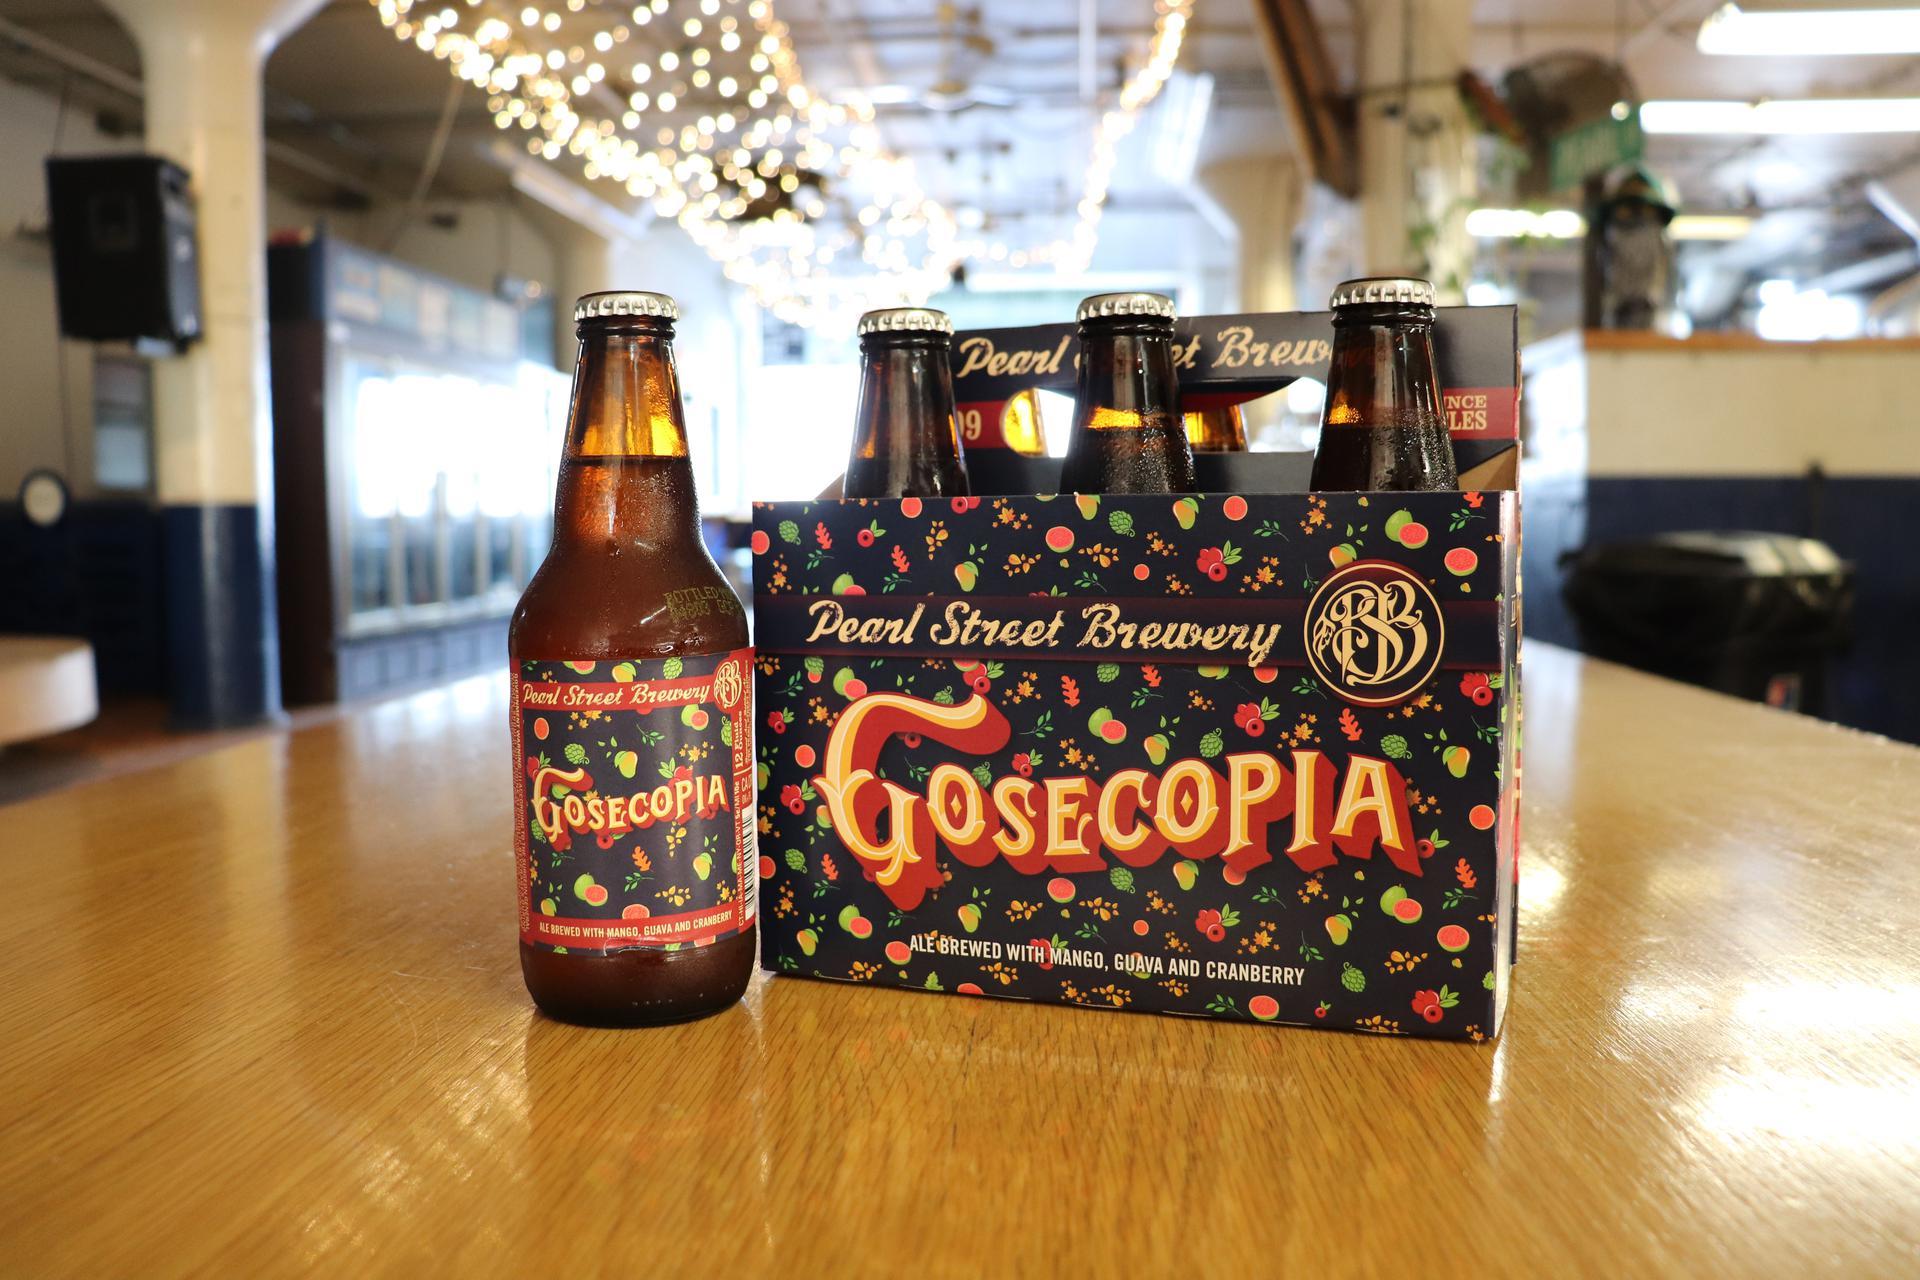  Seasonal Release of Gosecopia made with Wisconsin Cranberries.